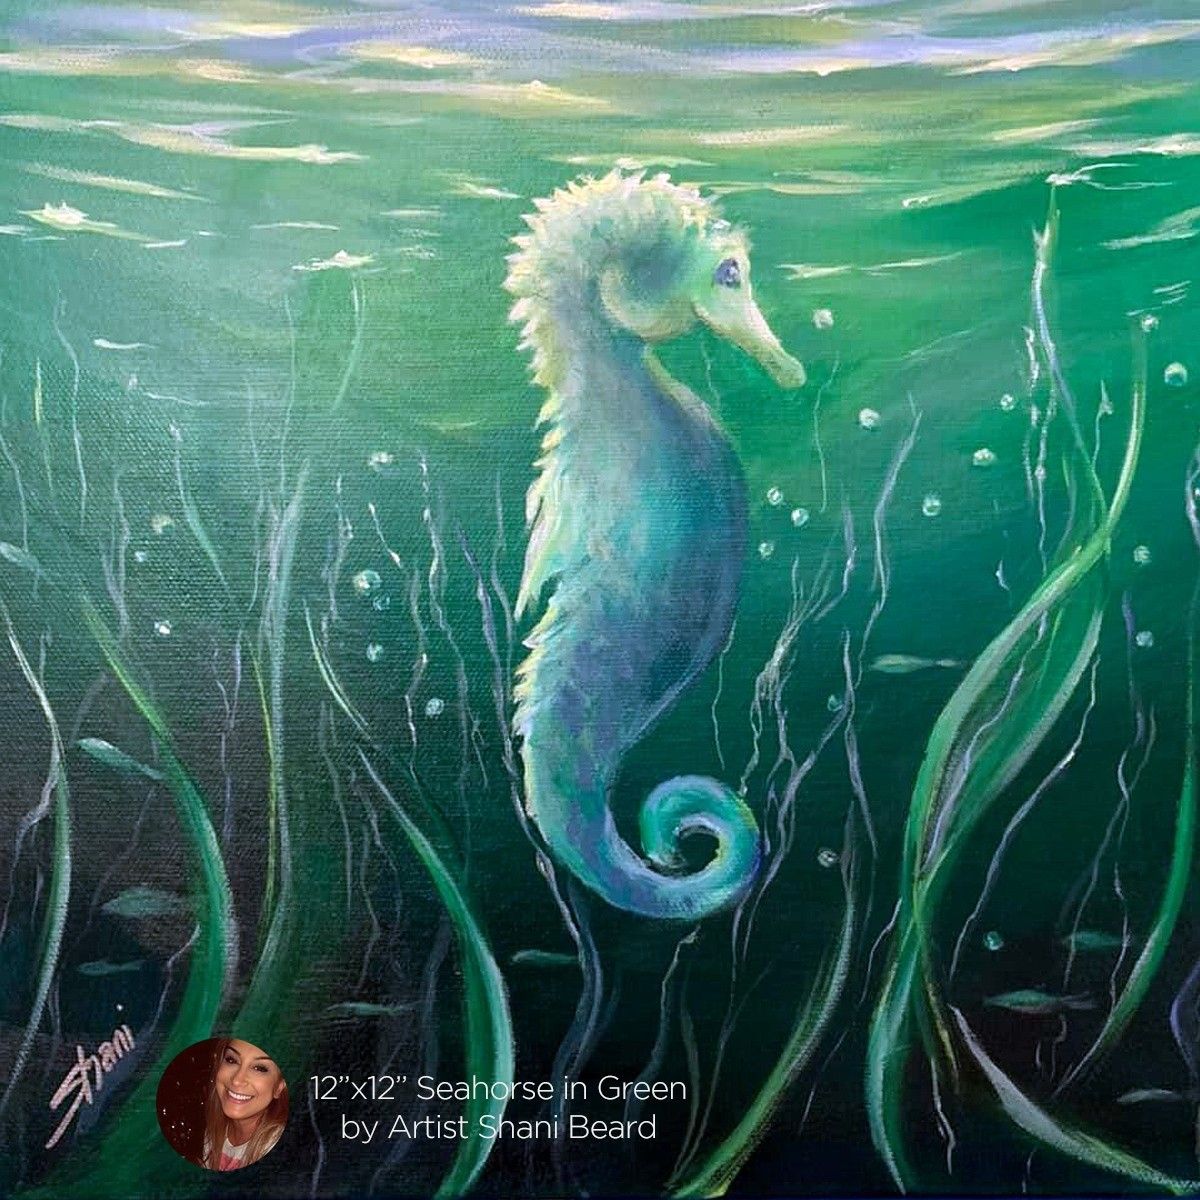 Seahorse in Green by Artist Shani Beard